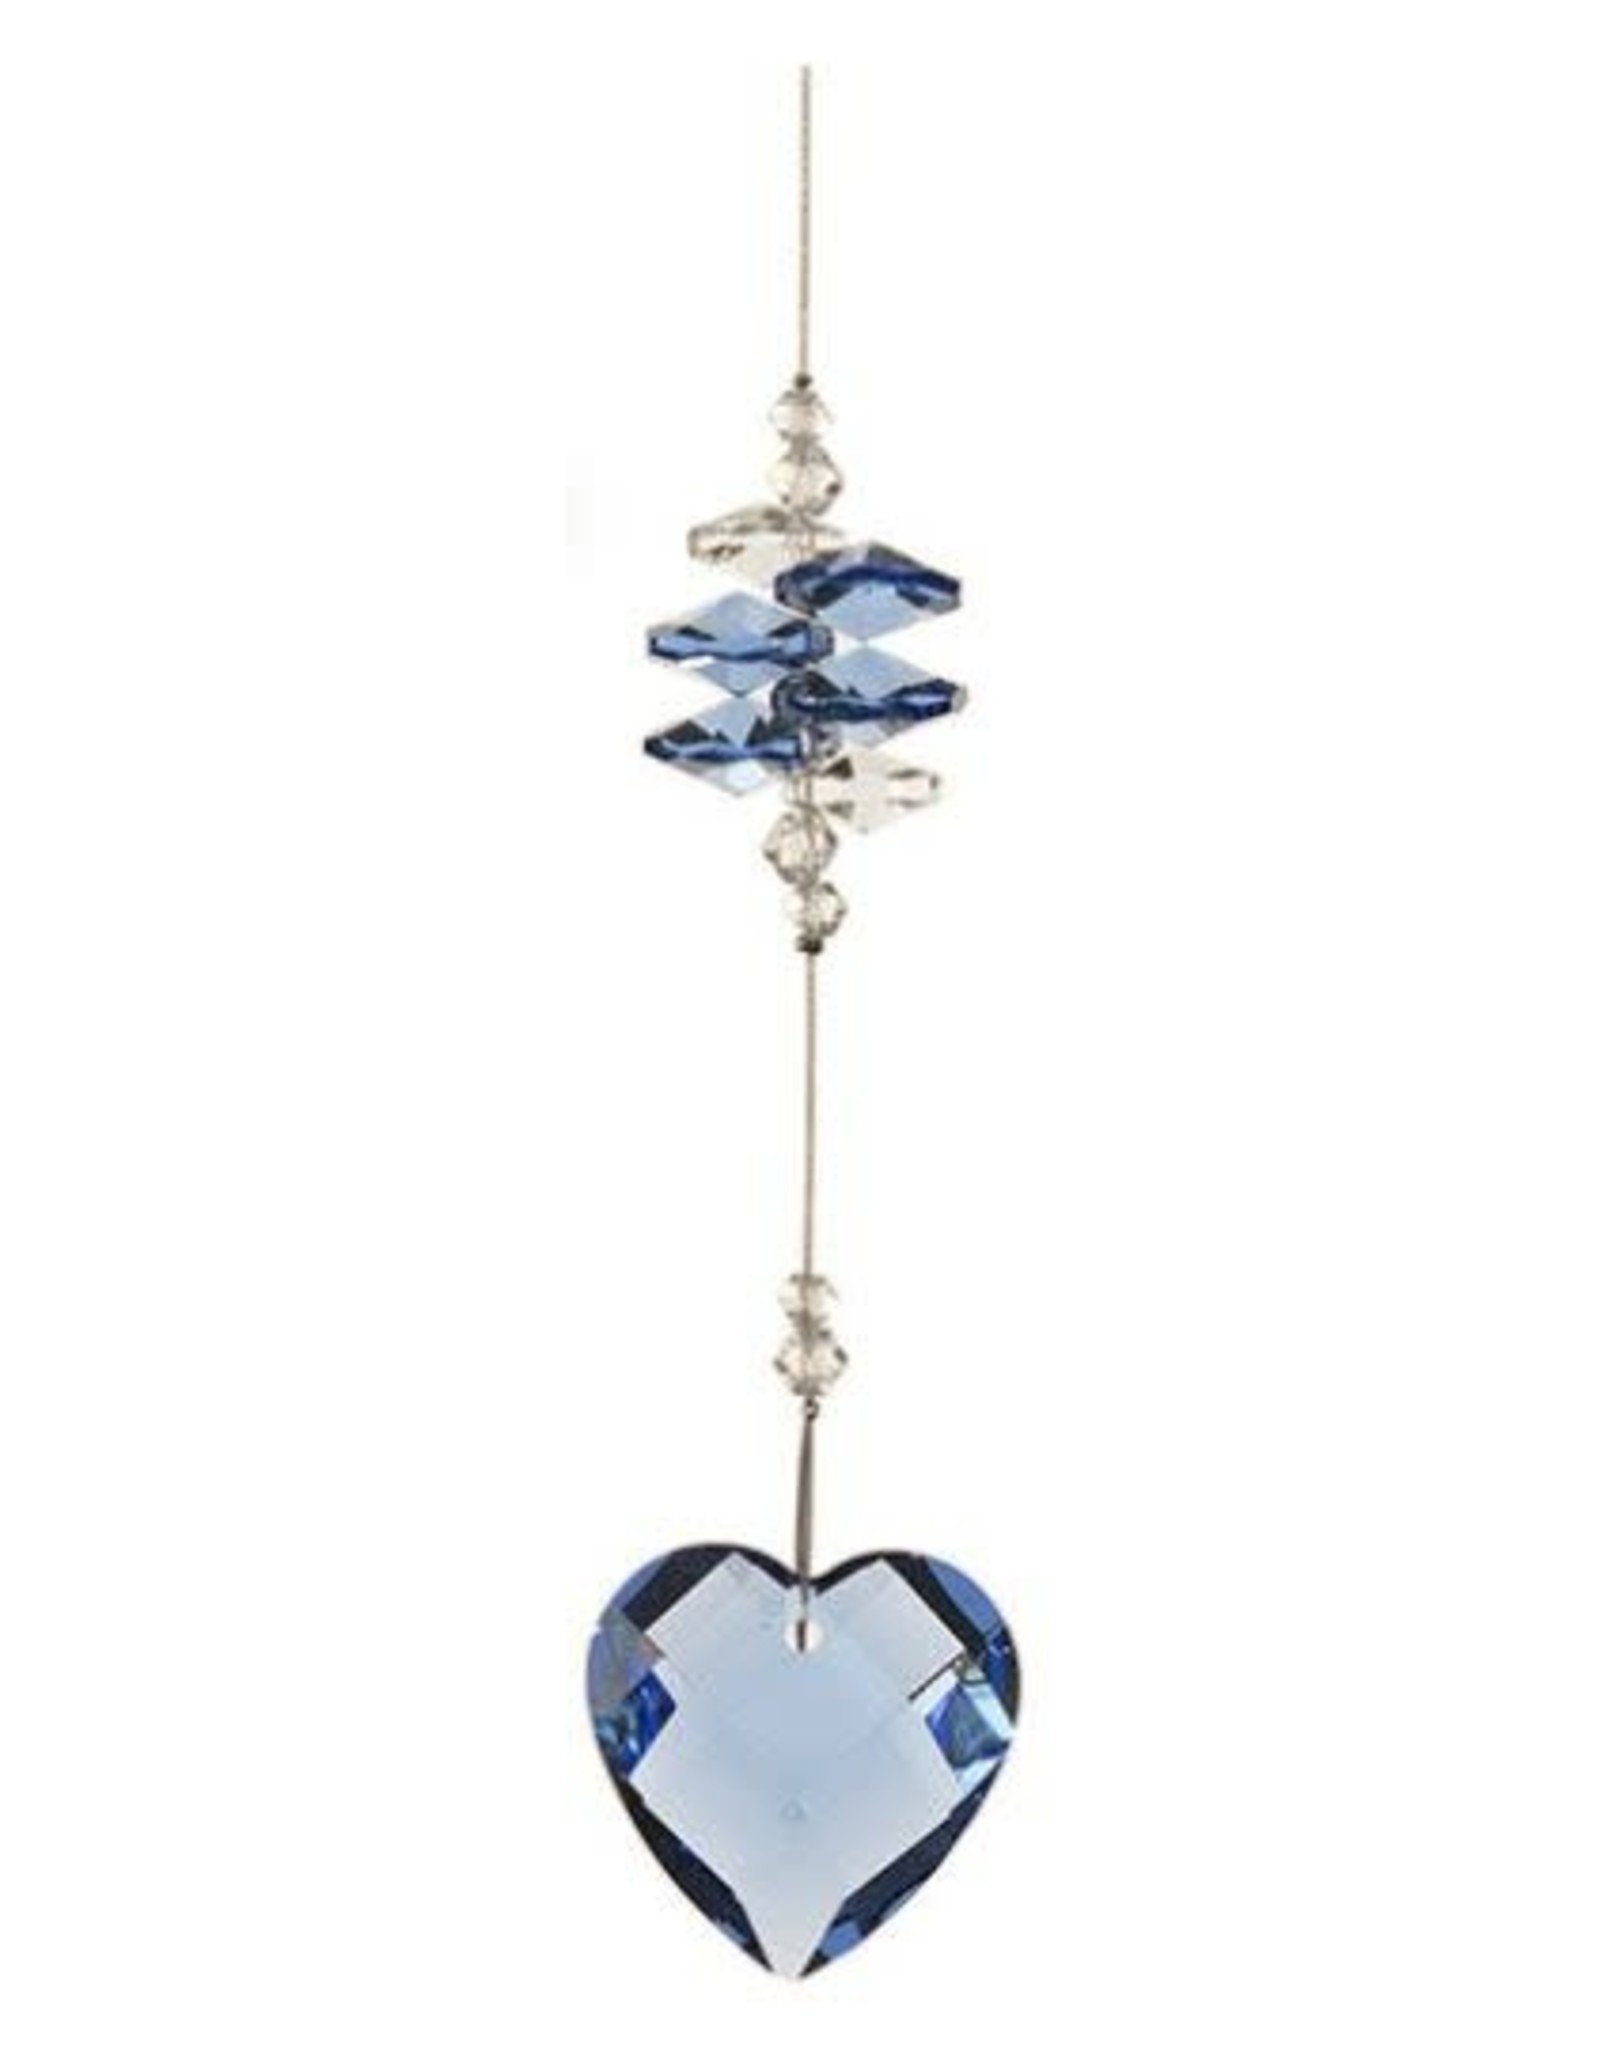 Crystal Art - Crystal Heart Suncatcher - Sapphire Blue